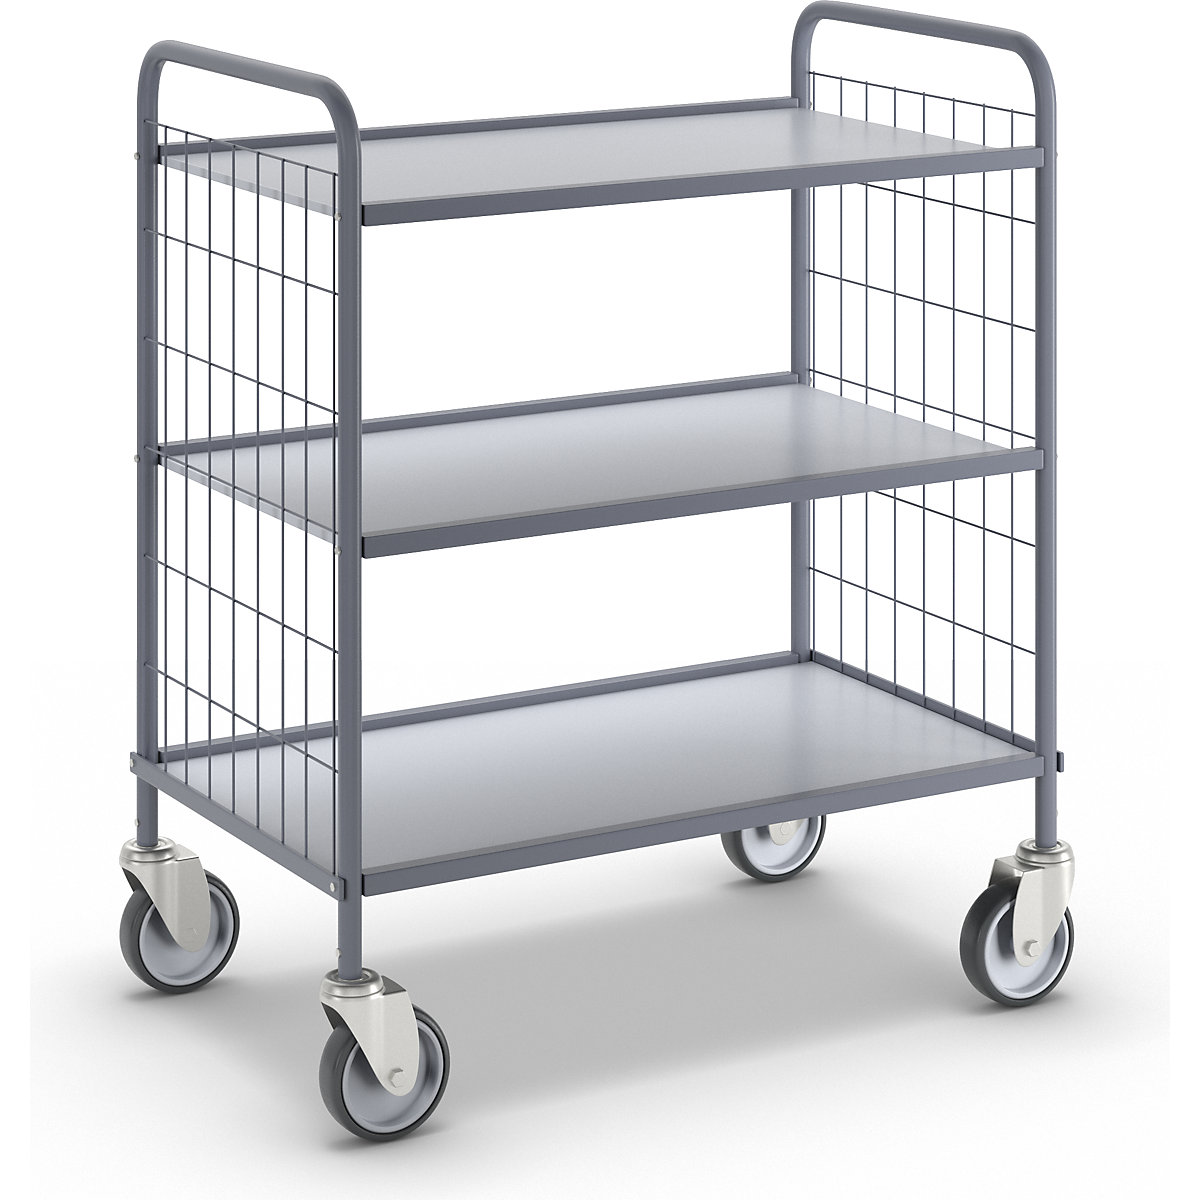 Office shelf trolley, max. load 150 kg, shelves / panels plastic coated in light grey, 3 shelves, 4 swivel castors-1